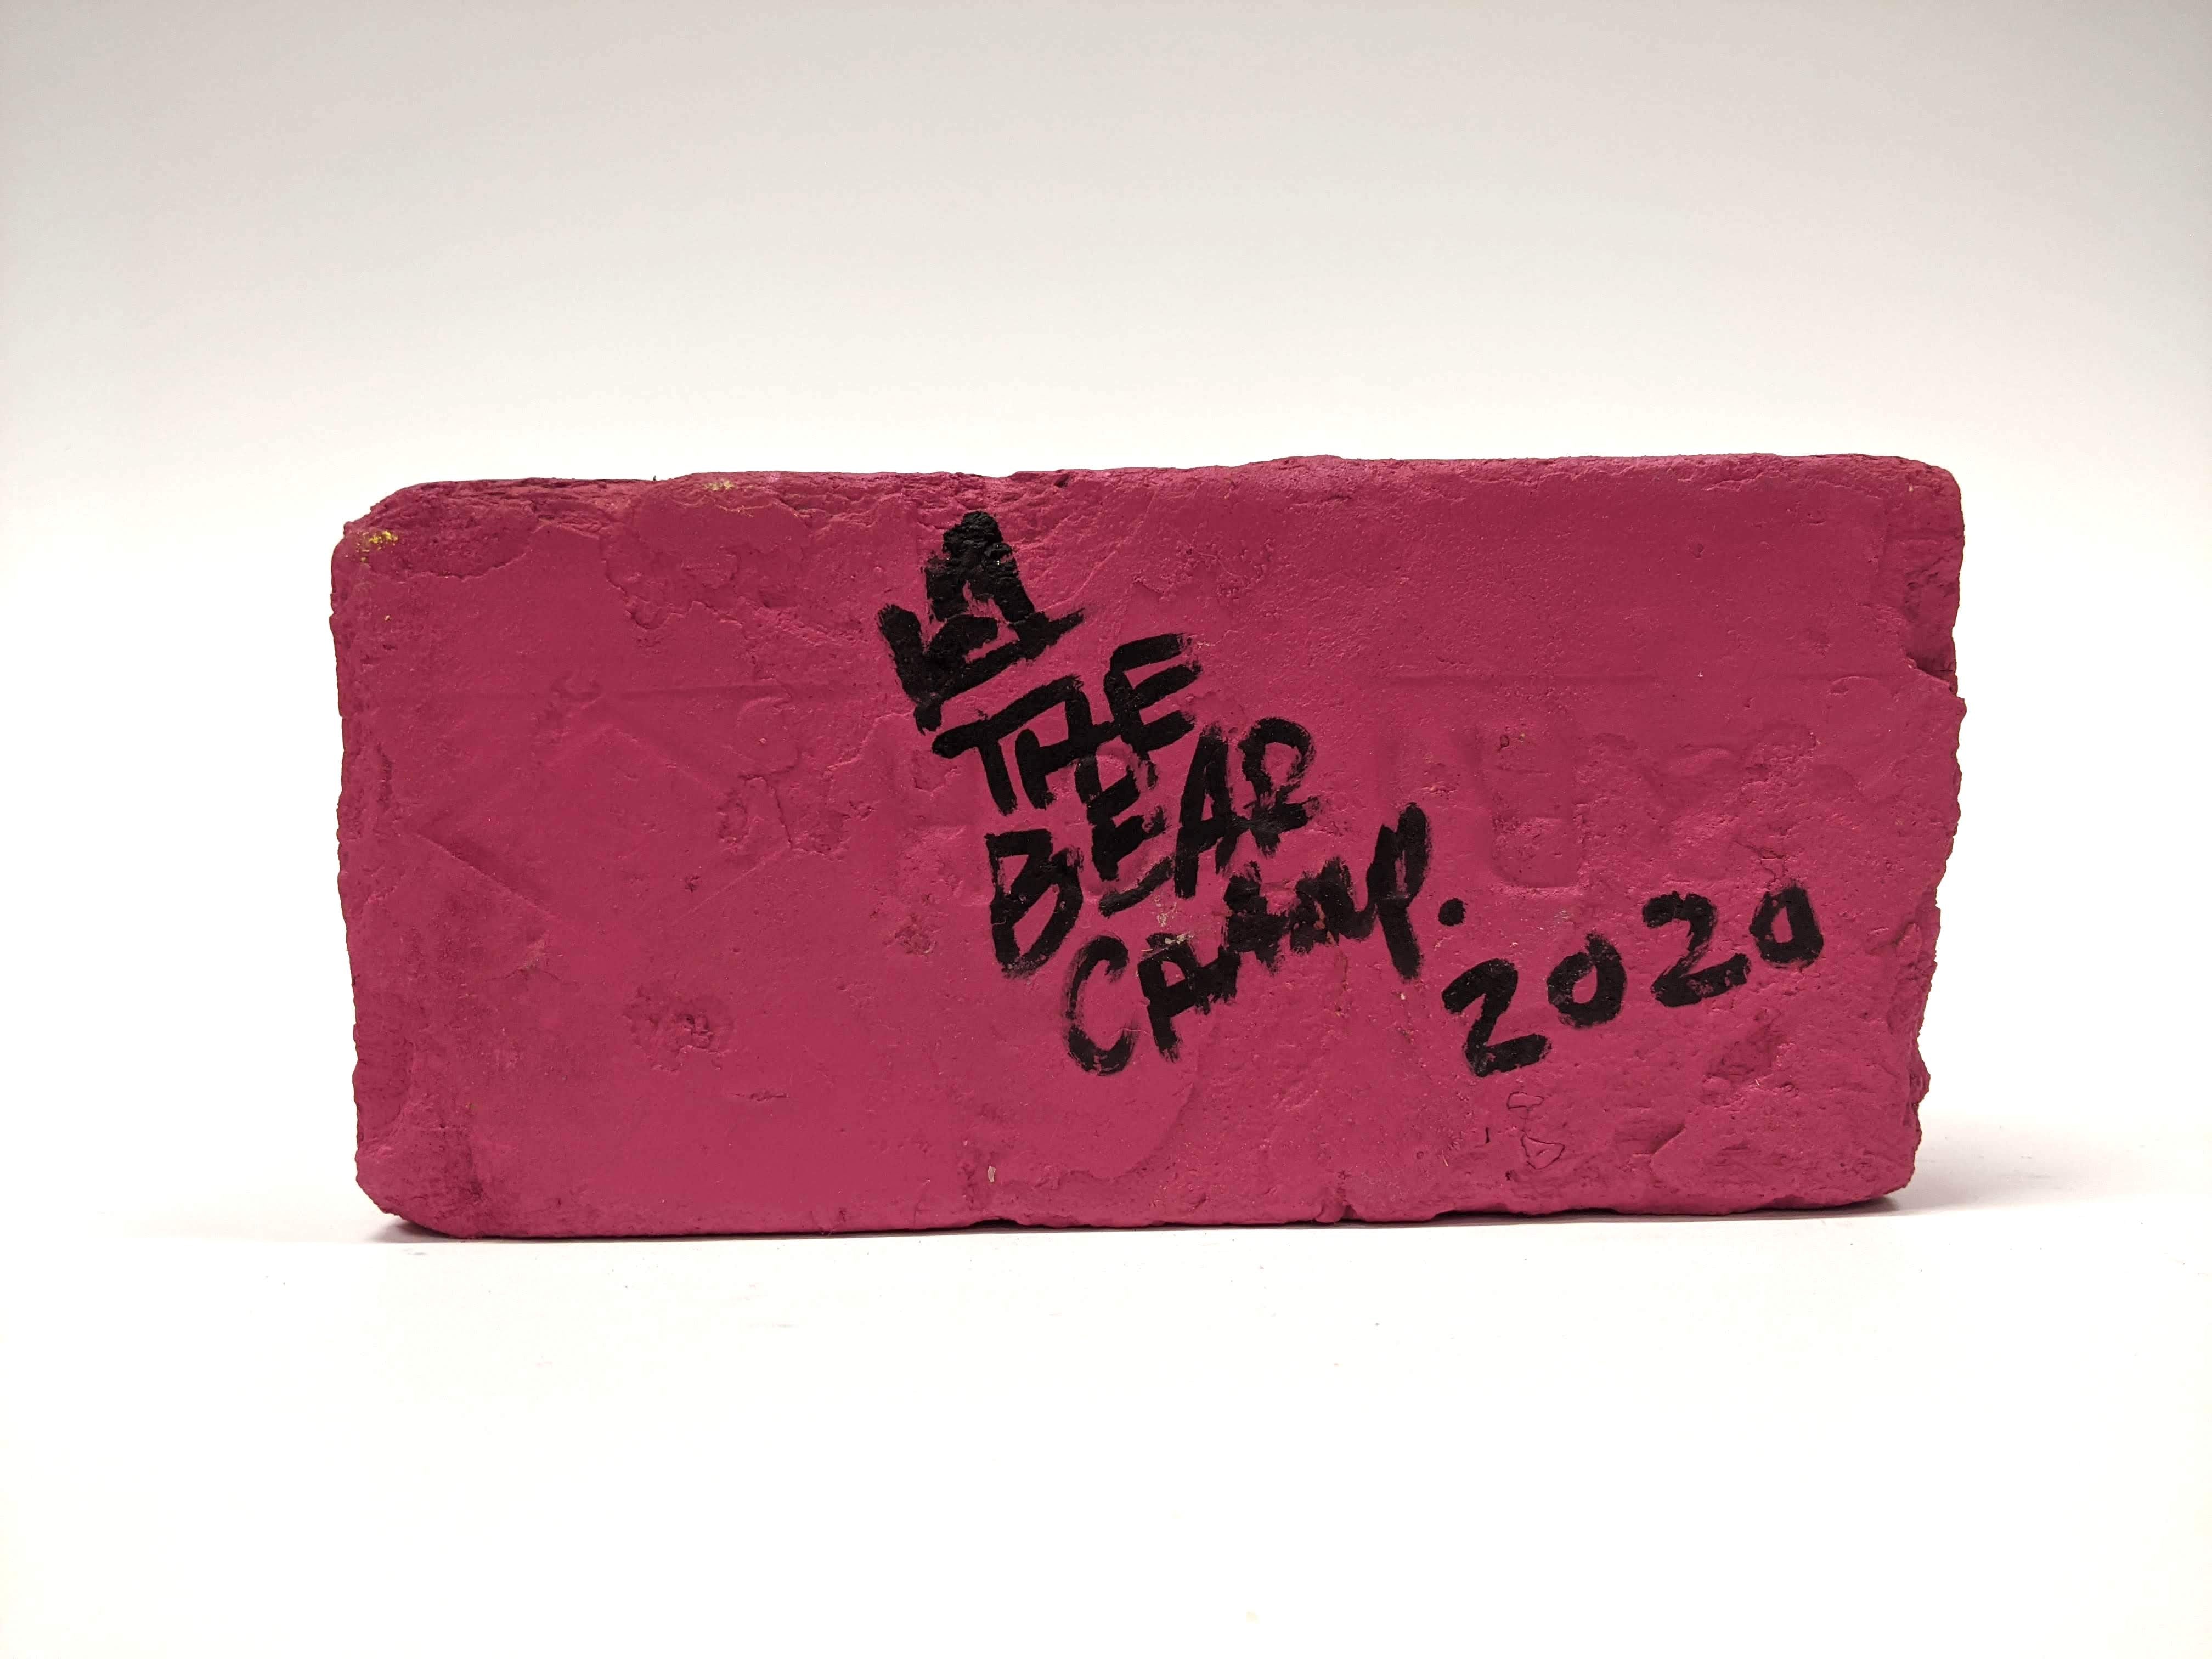 Brick #2 by JC Rivera